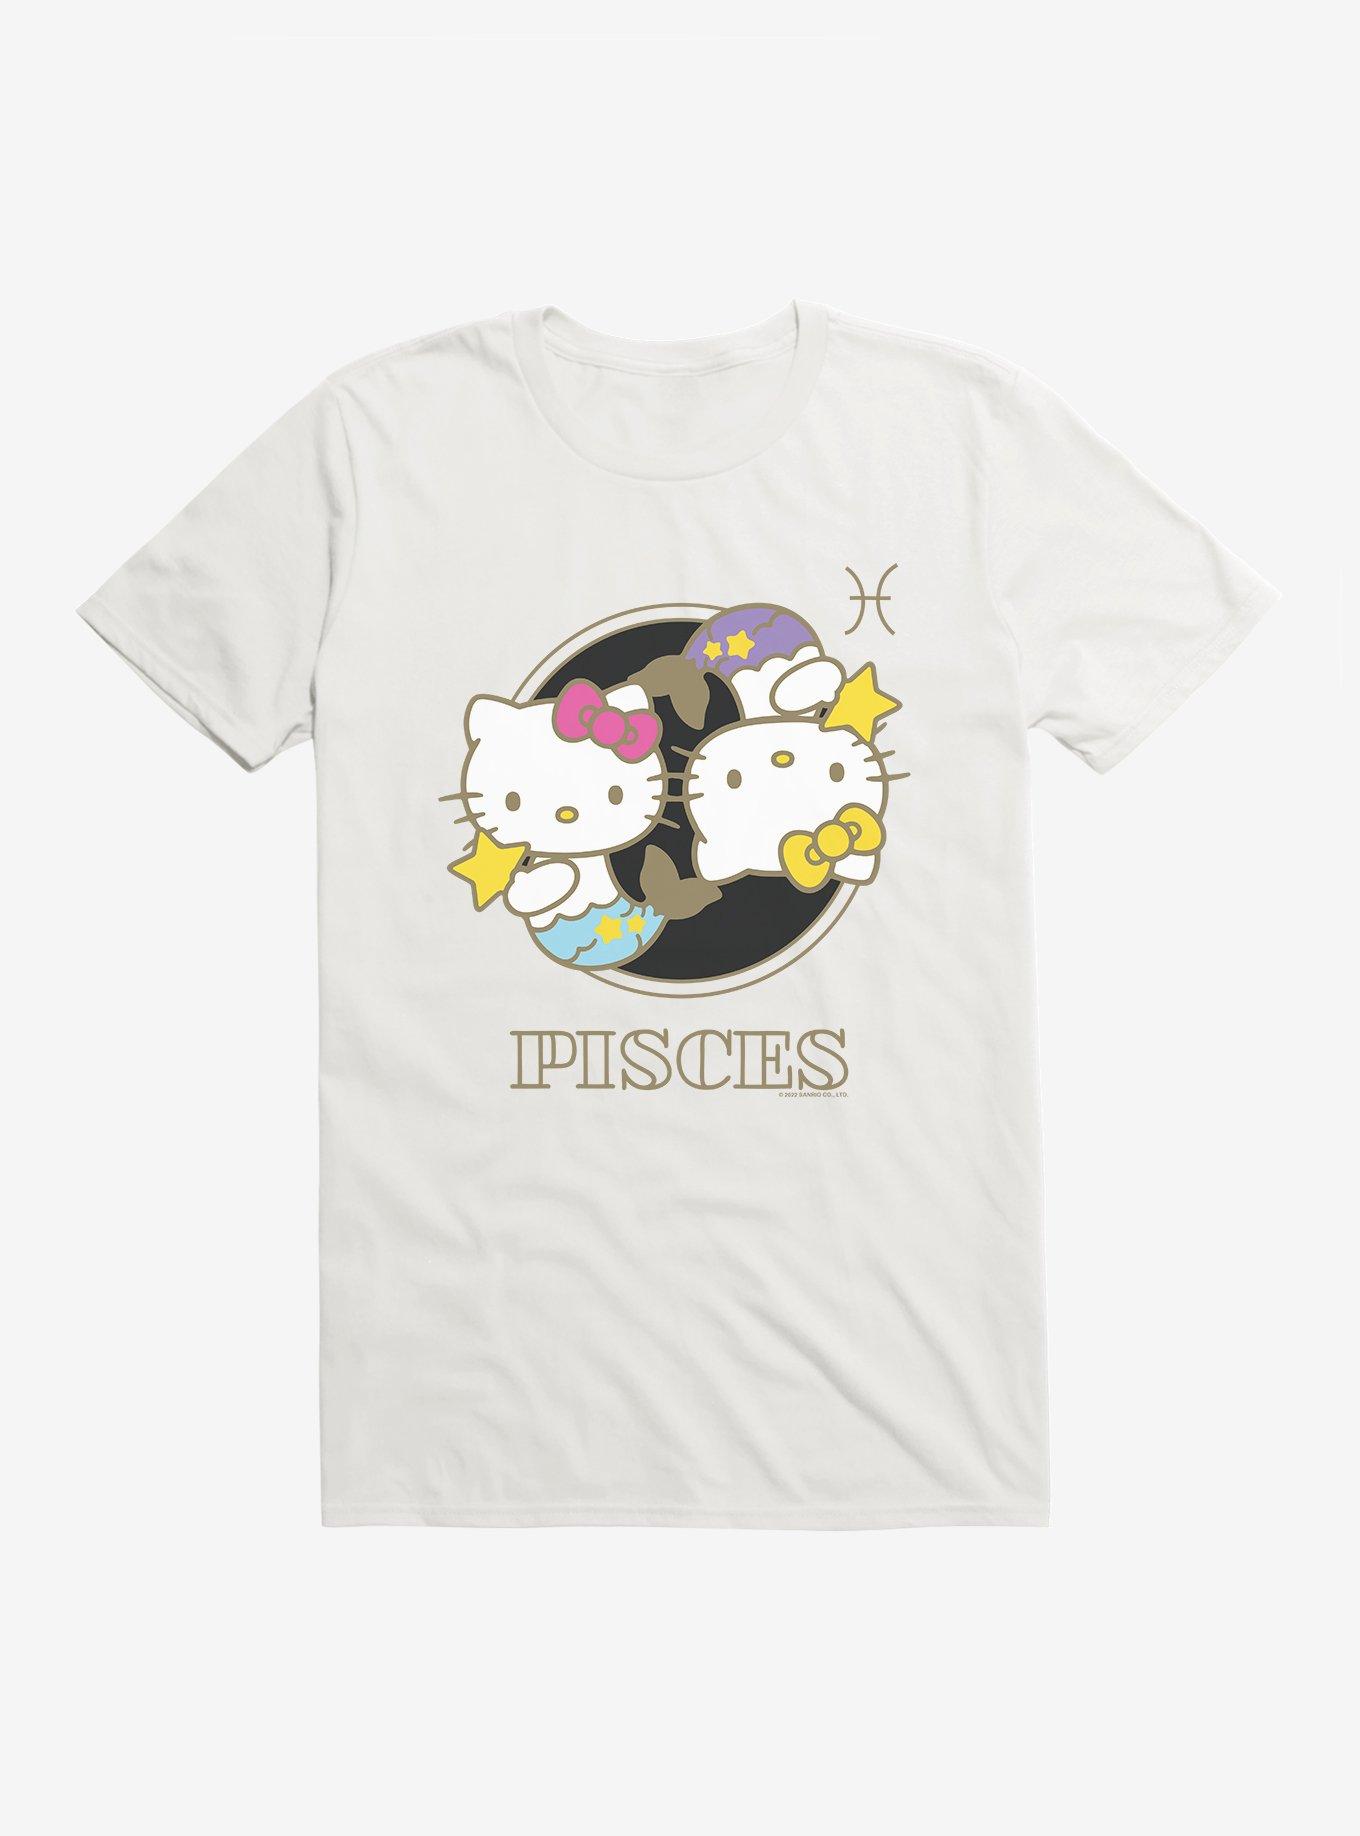 Hello Kitty Star Sign Pisces Stencil T-Shirt